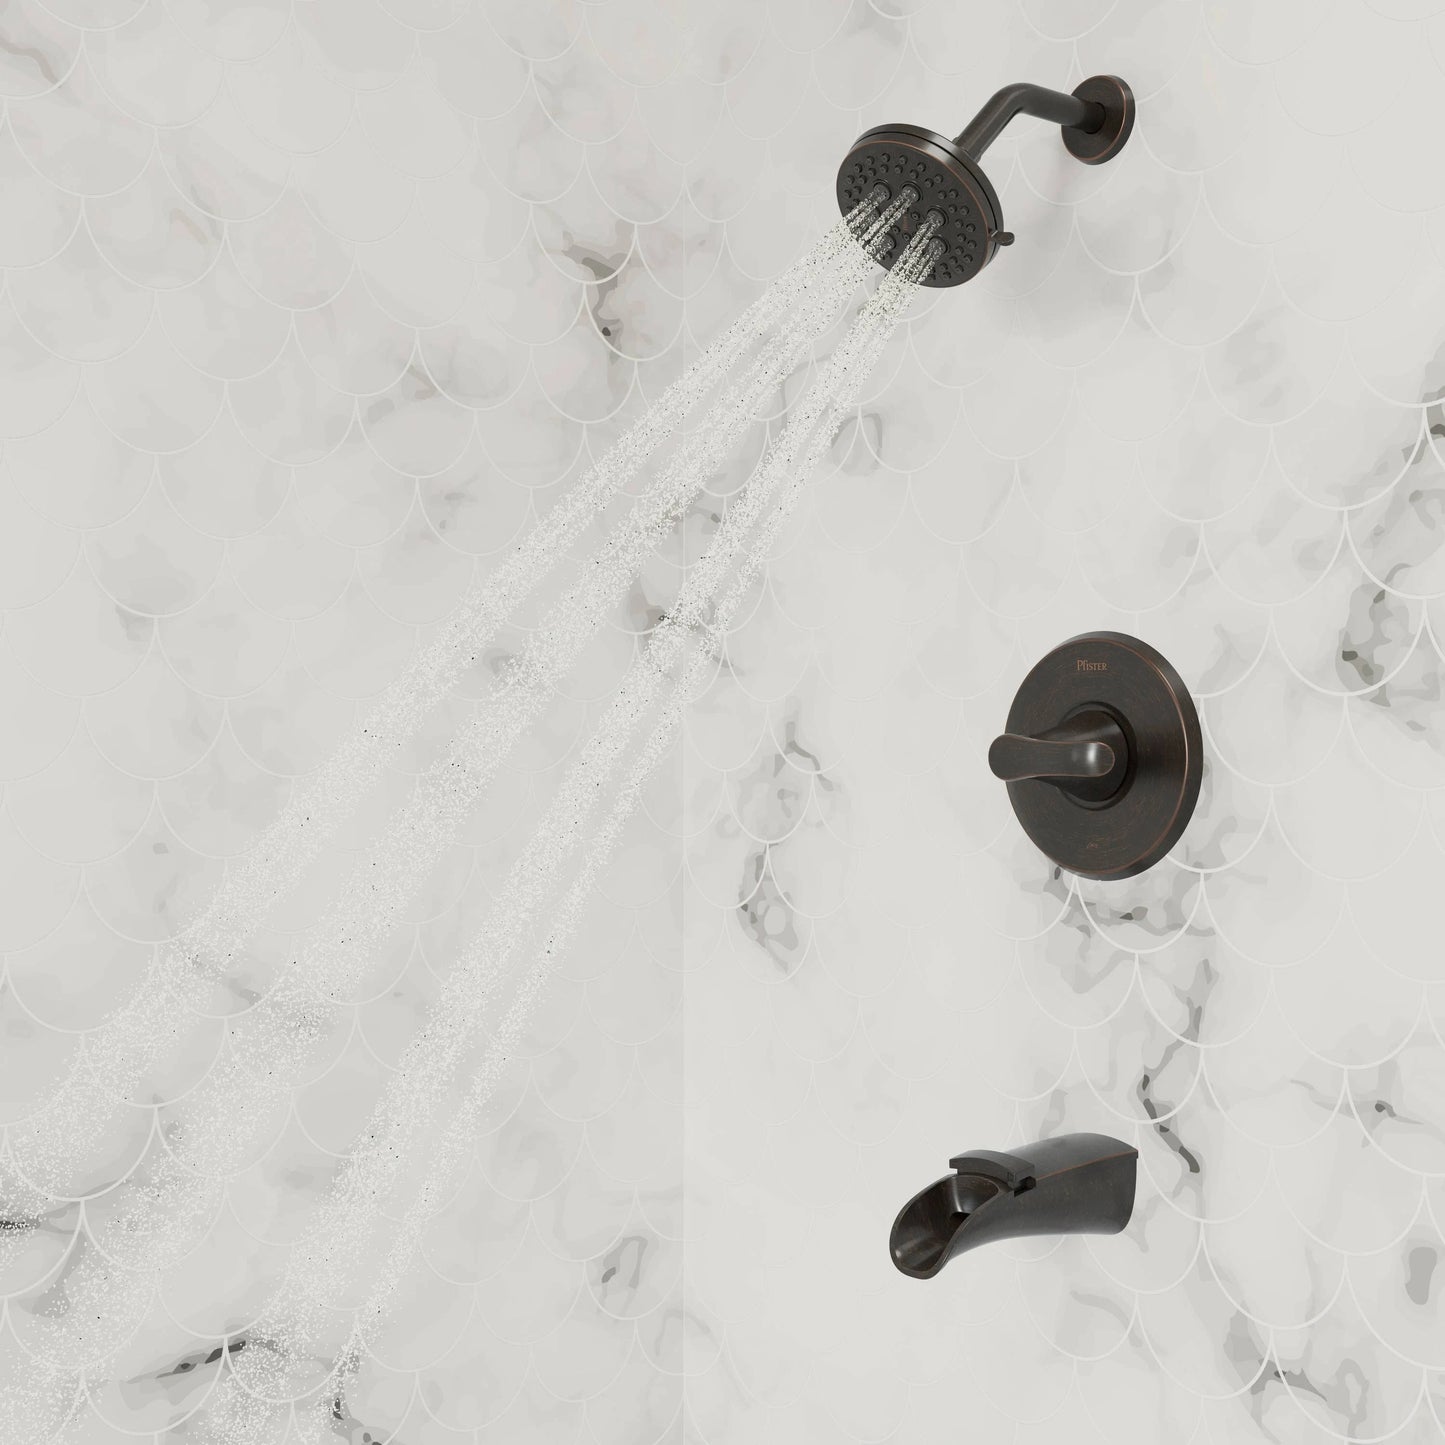 Pfister Jaida 8P8-WS2-JDSY Tub and Shower Faucet w/ Valve Tuscan Bronze